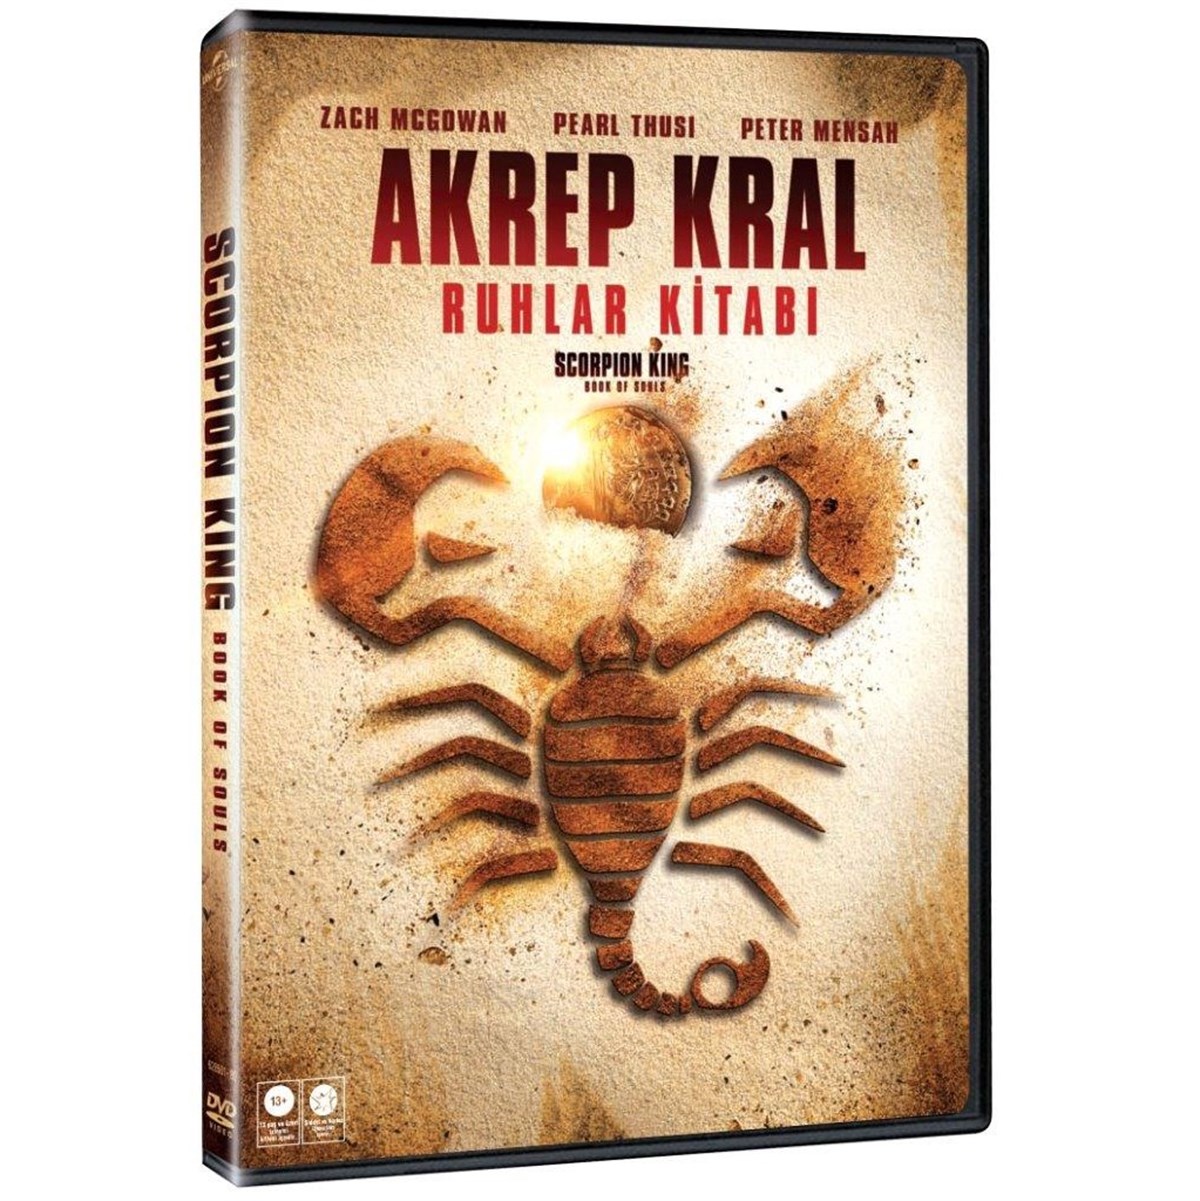 akrep-kral-ruhlar-kitabi--scorpion-king--554c.jpg